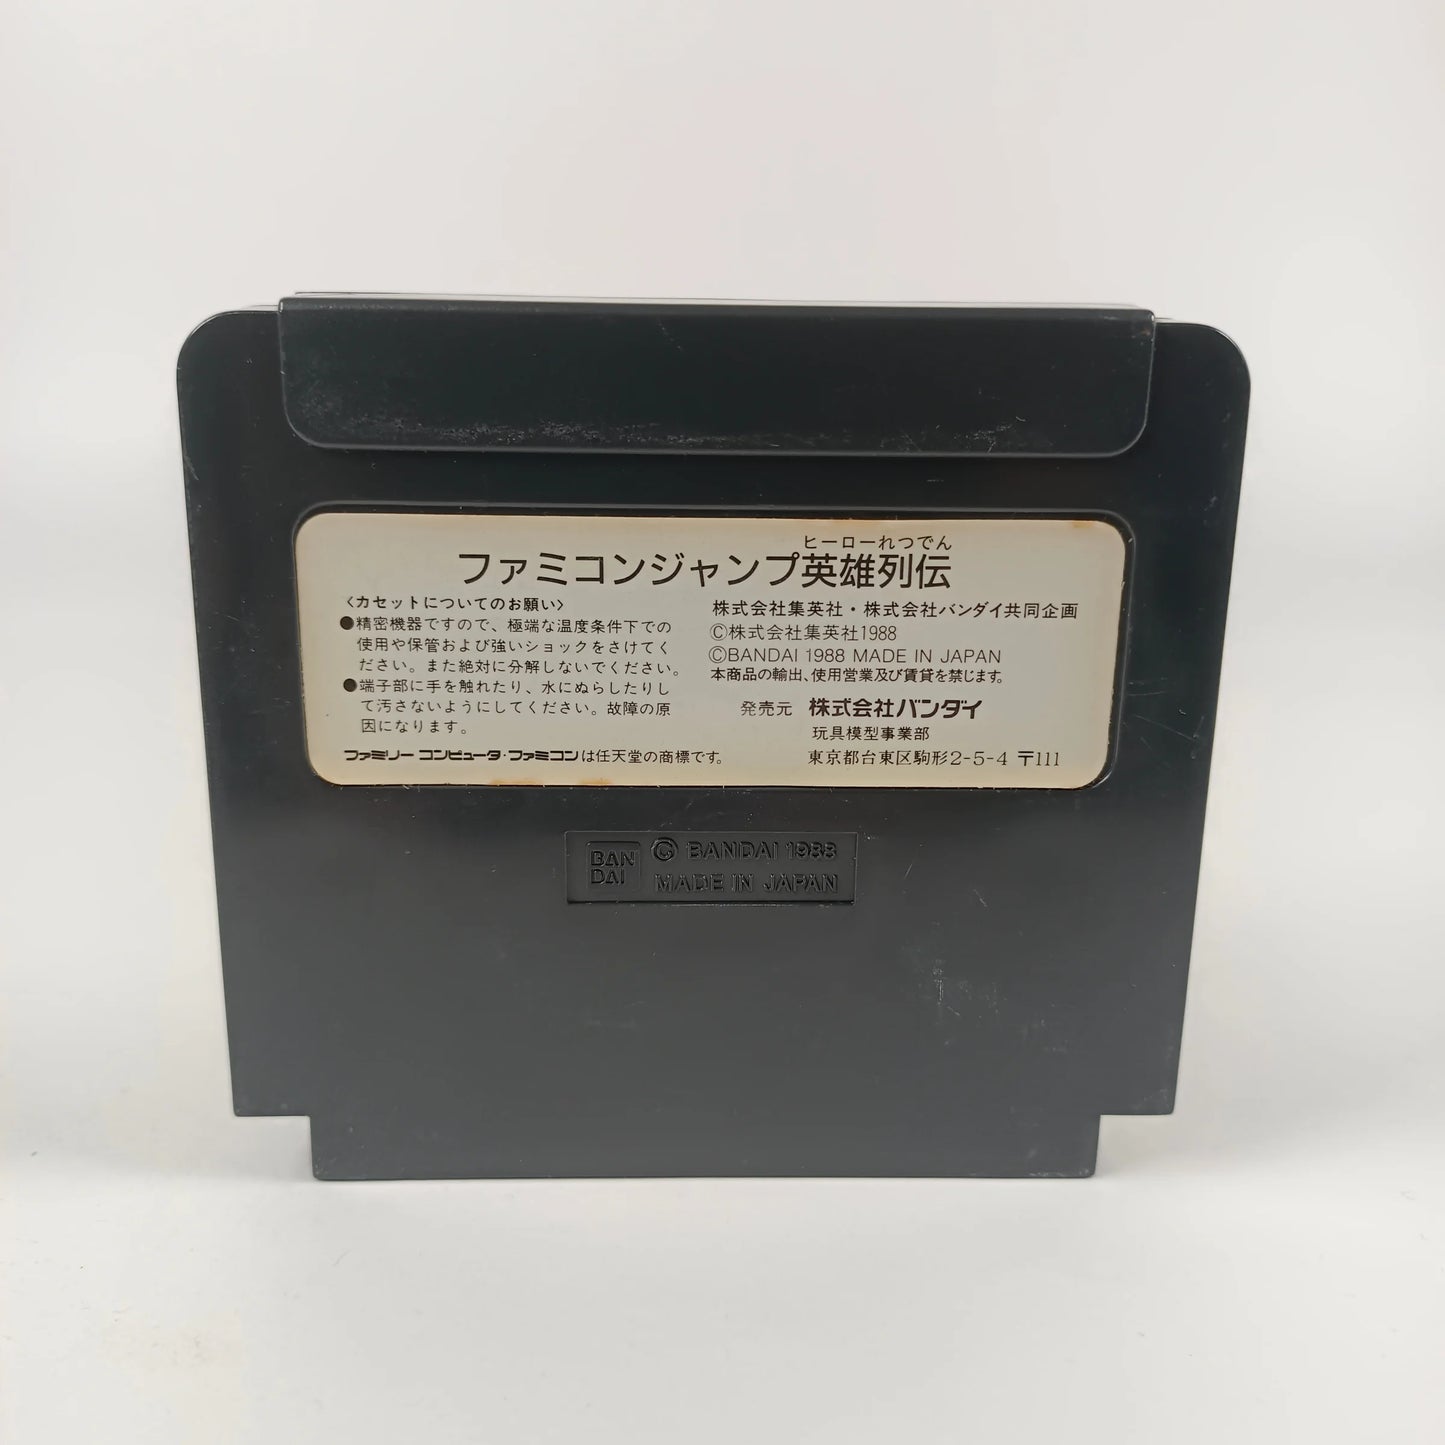 Famicom Jump: Hero Retsuden